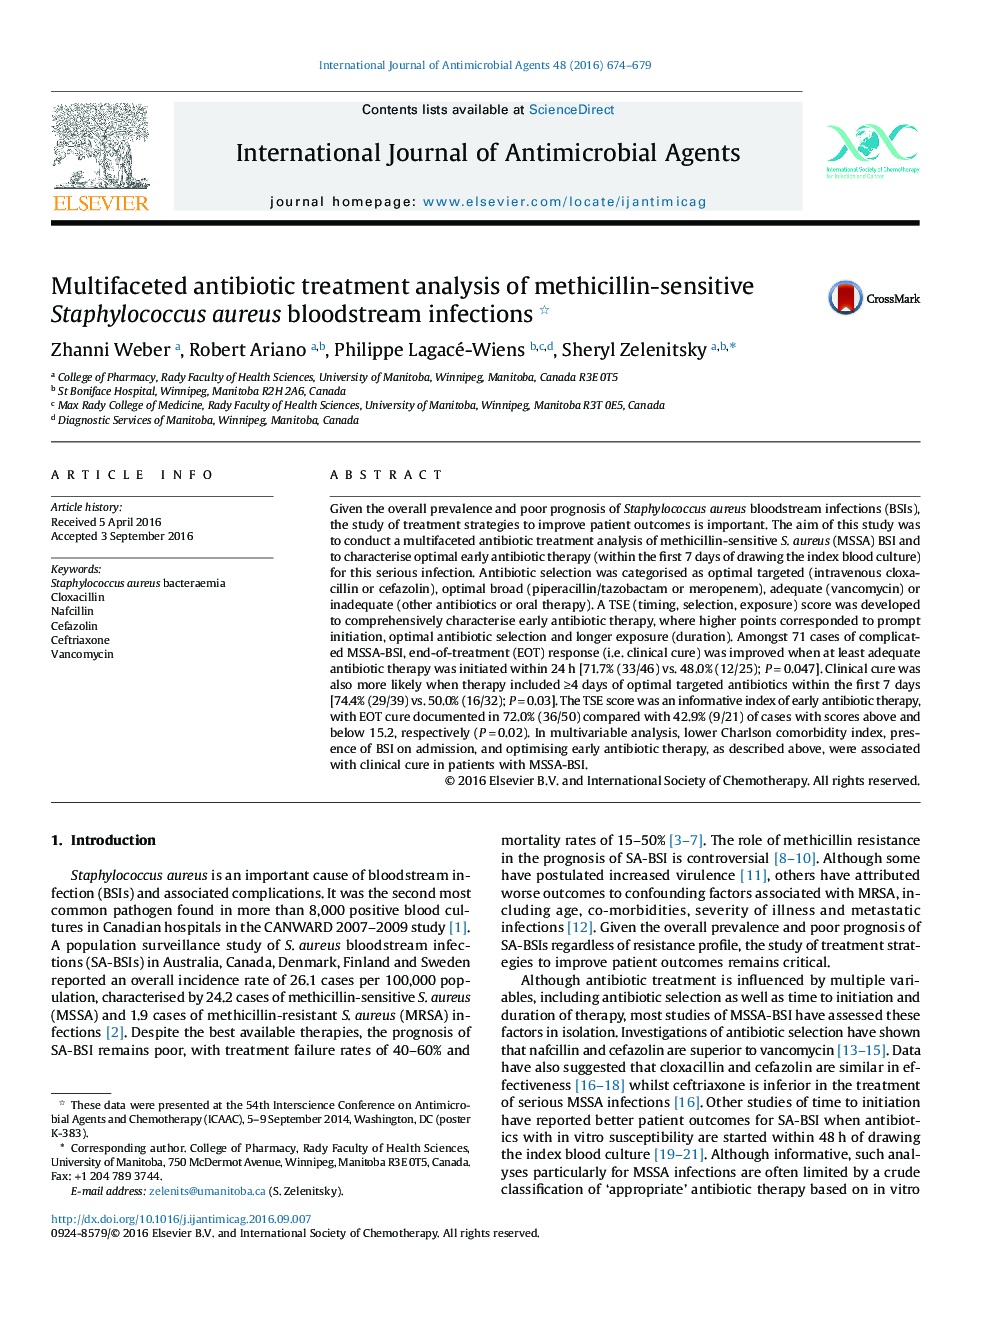 Multifaceted antibiotic treatment analysis of methicillin-sensitive Staphylococcus aureus bloodstream infections